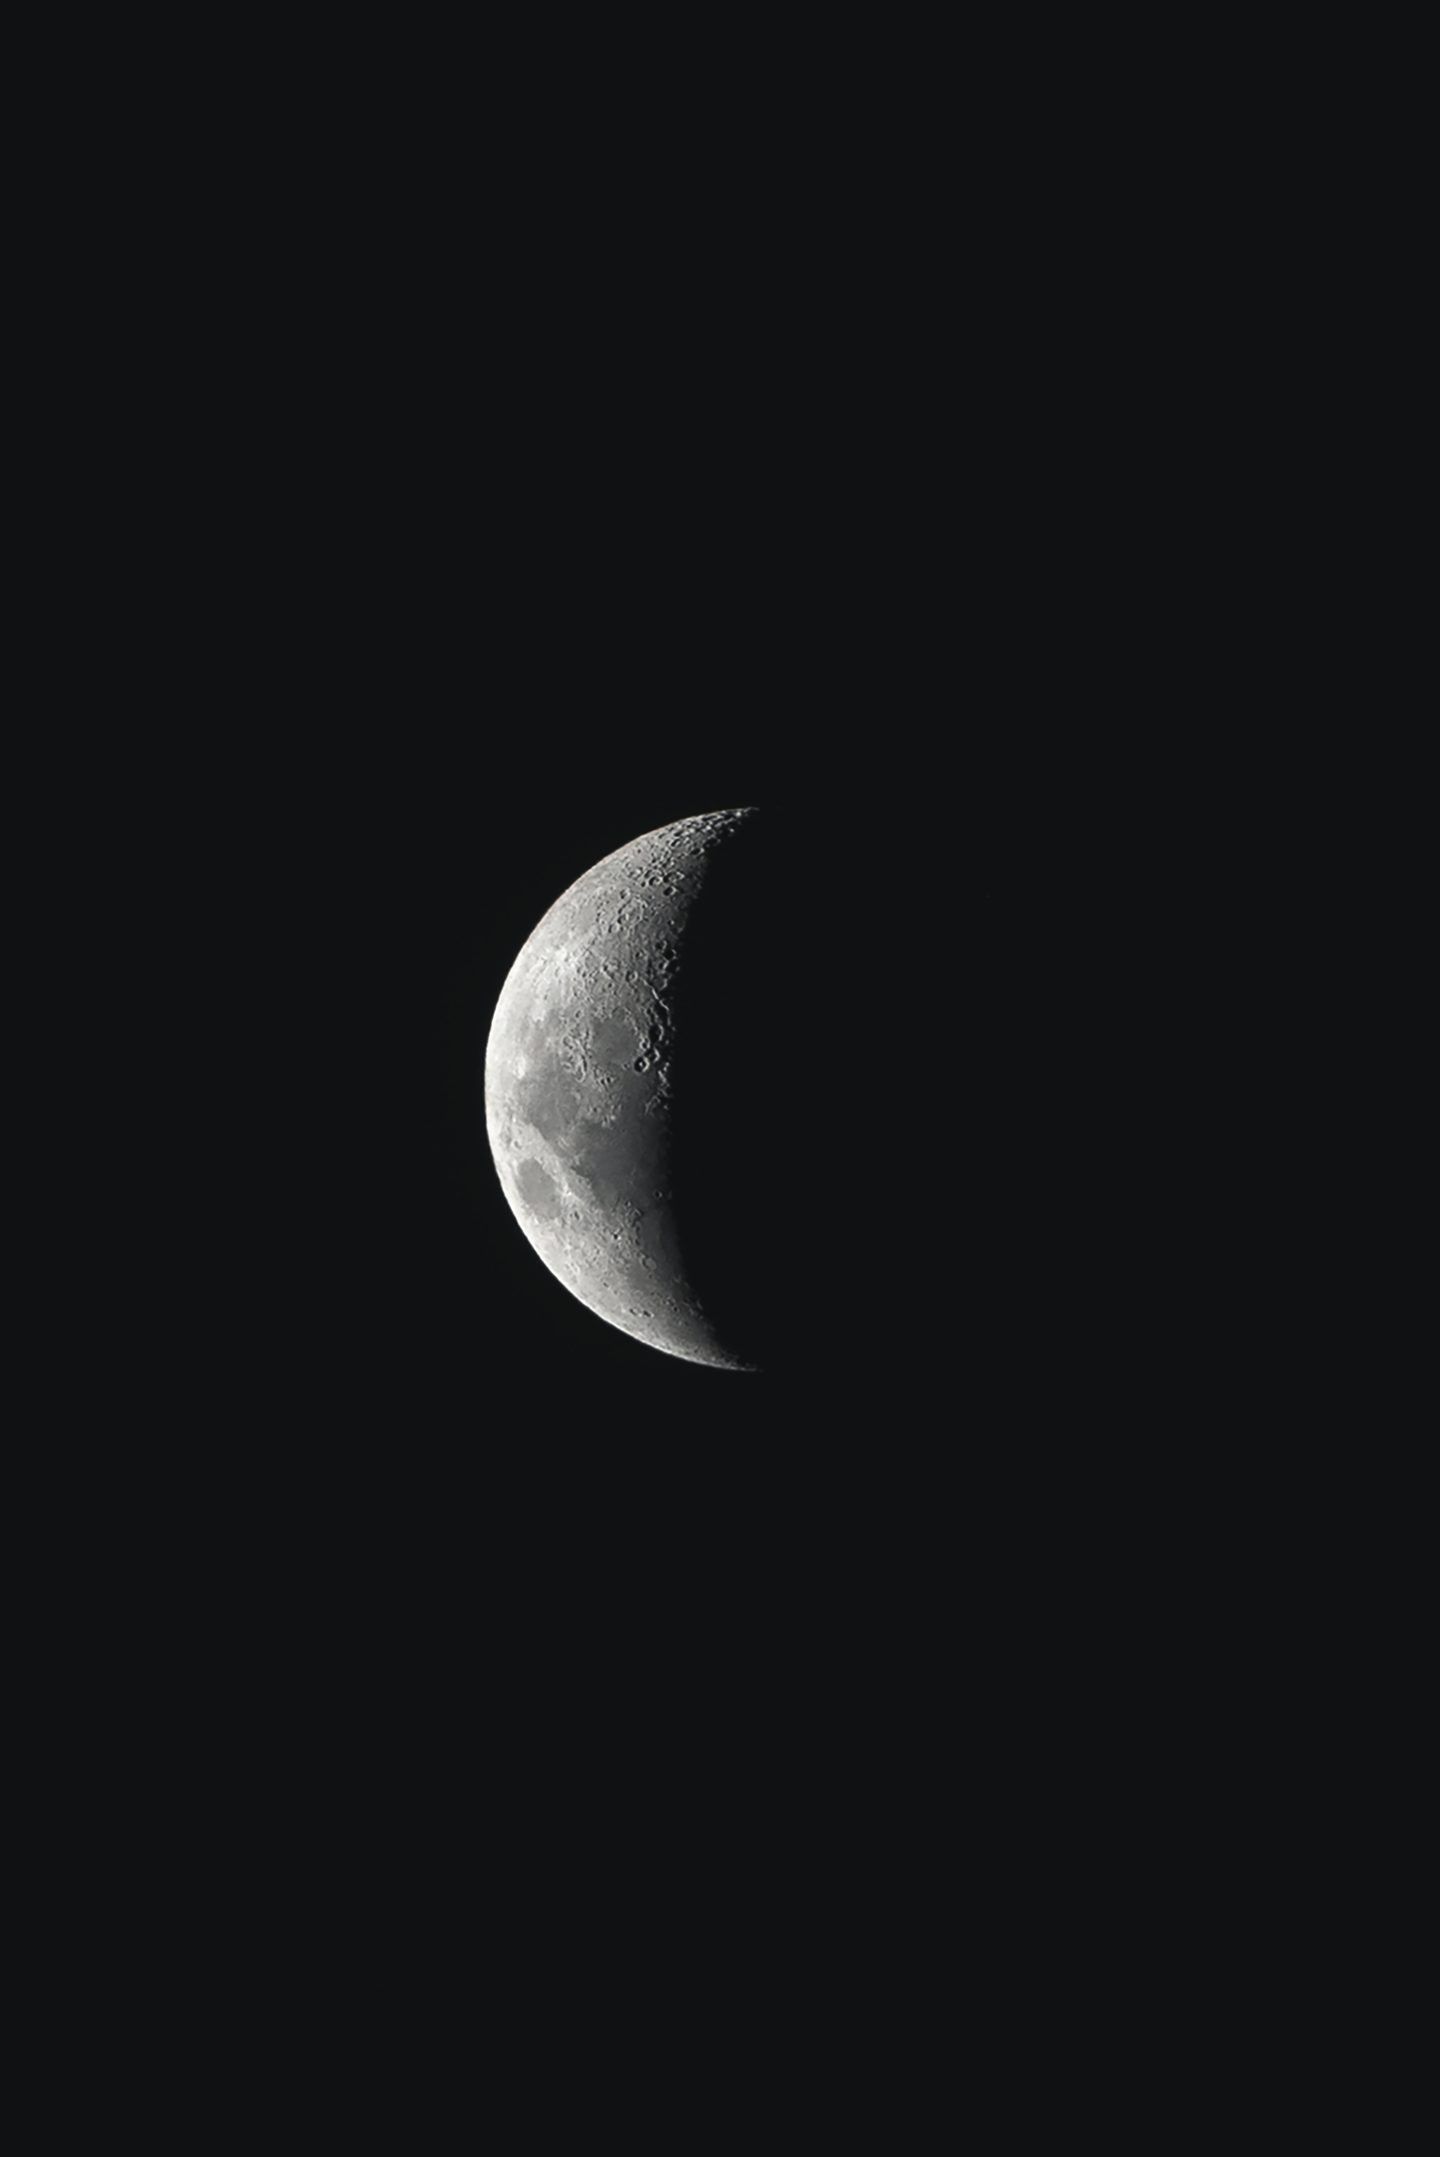 The moon in black and white - Black phone, iPhone, dark phone